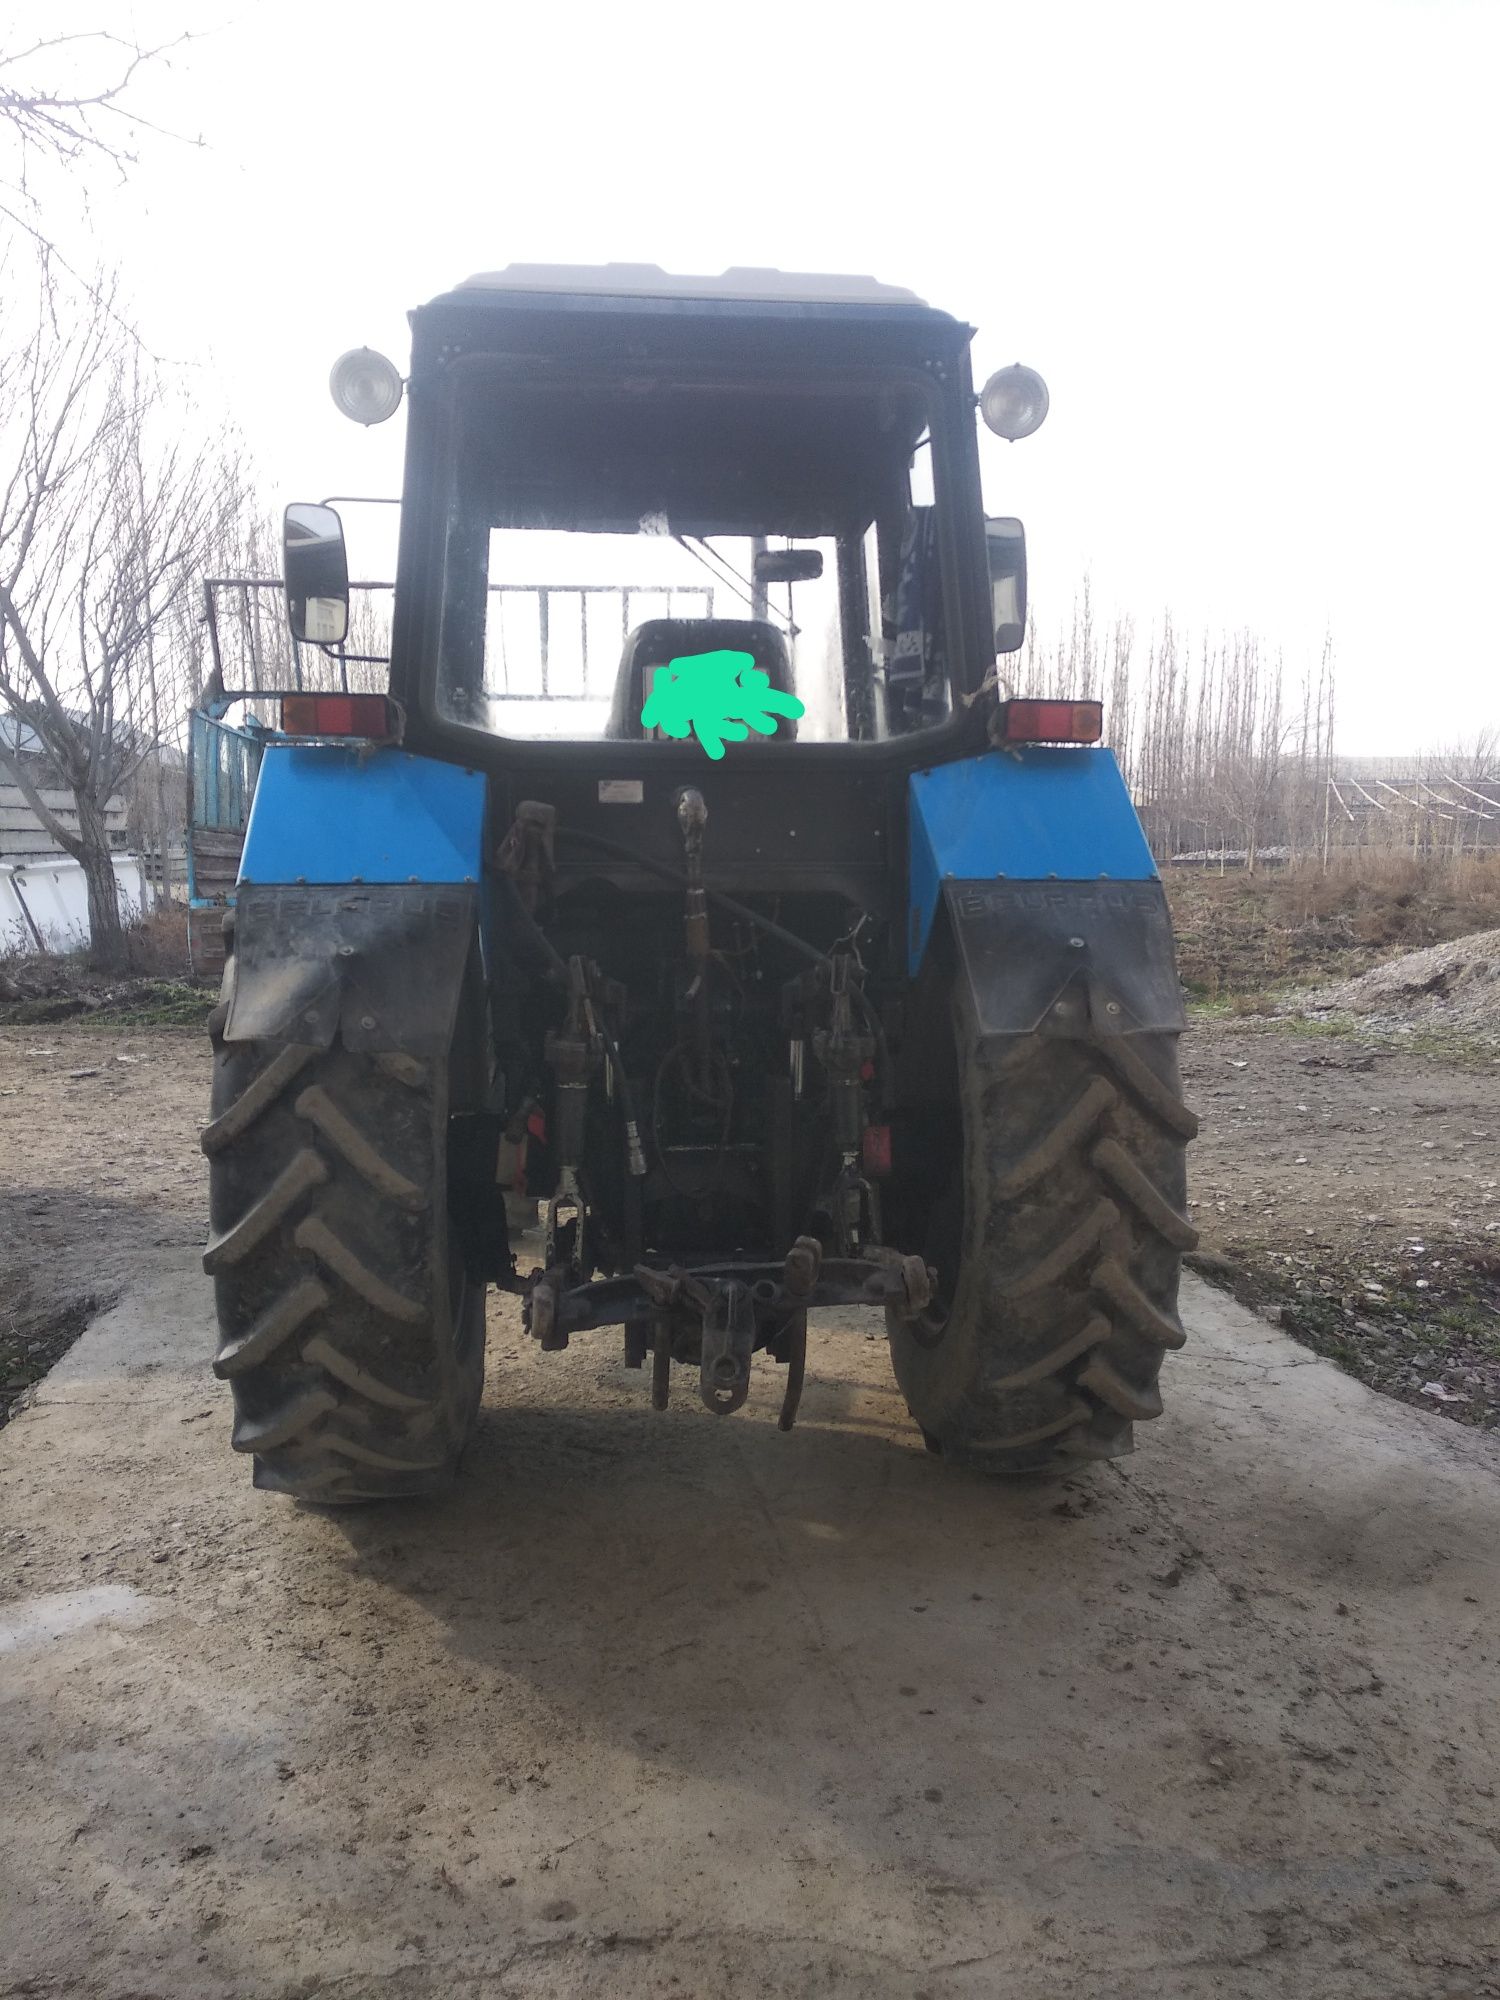 Traktor belarus  1221.2 markasi